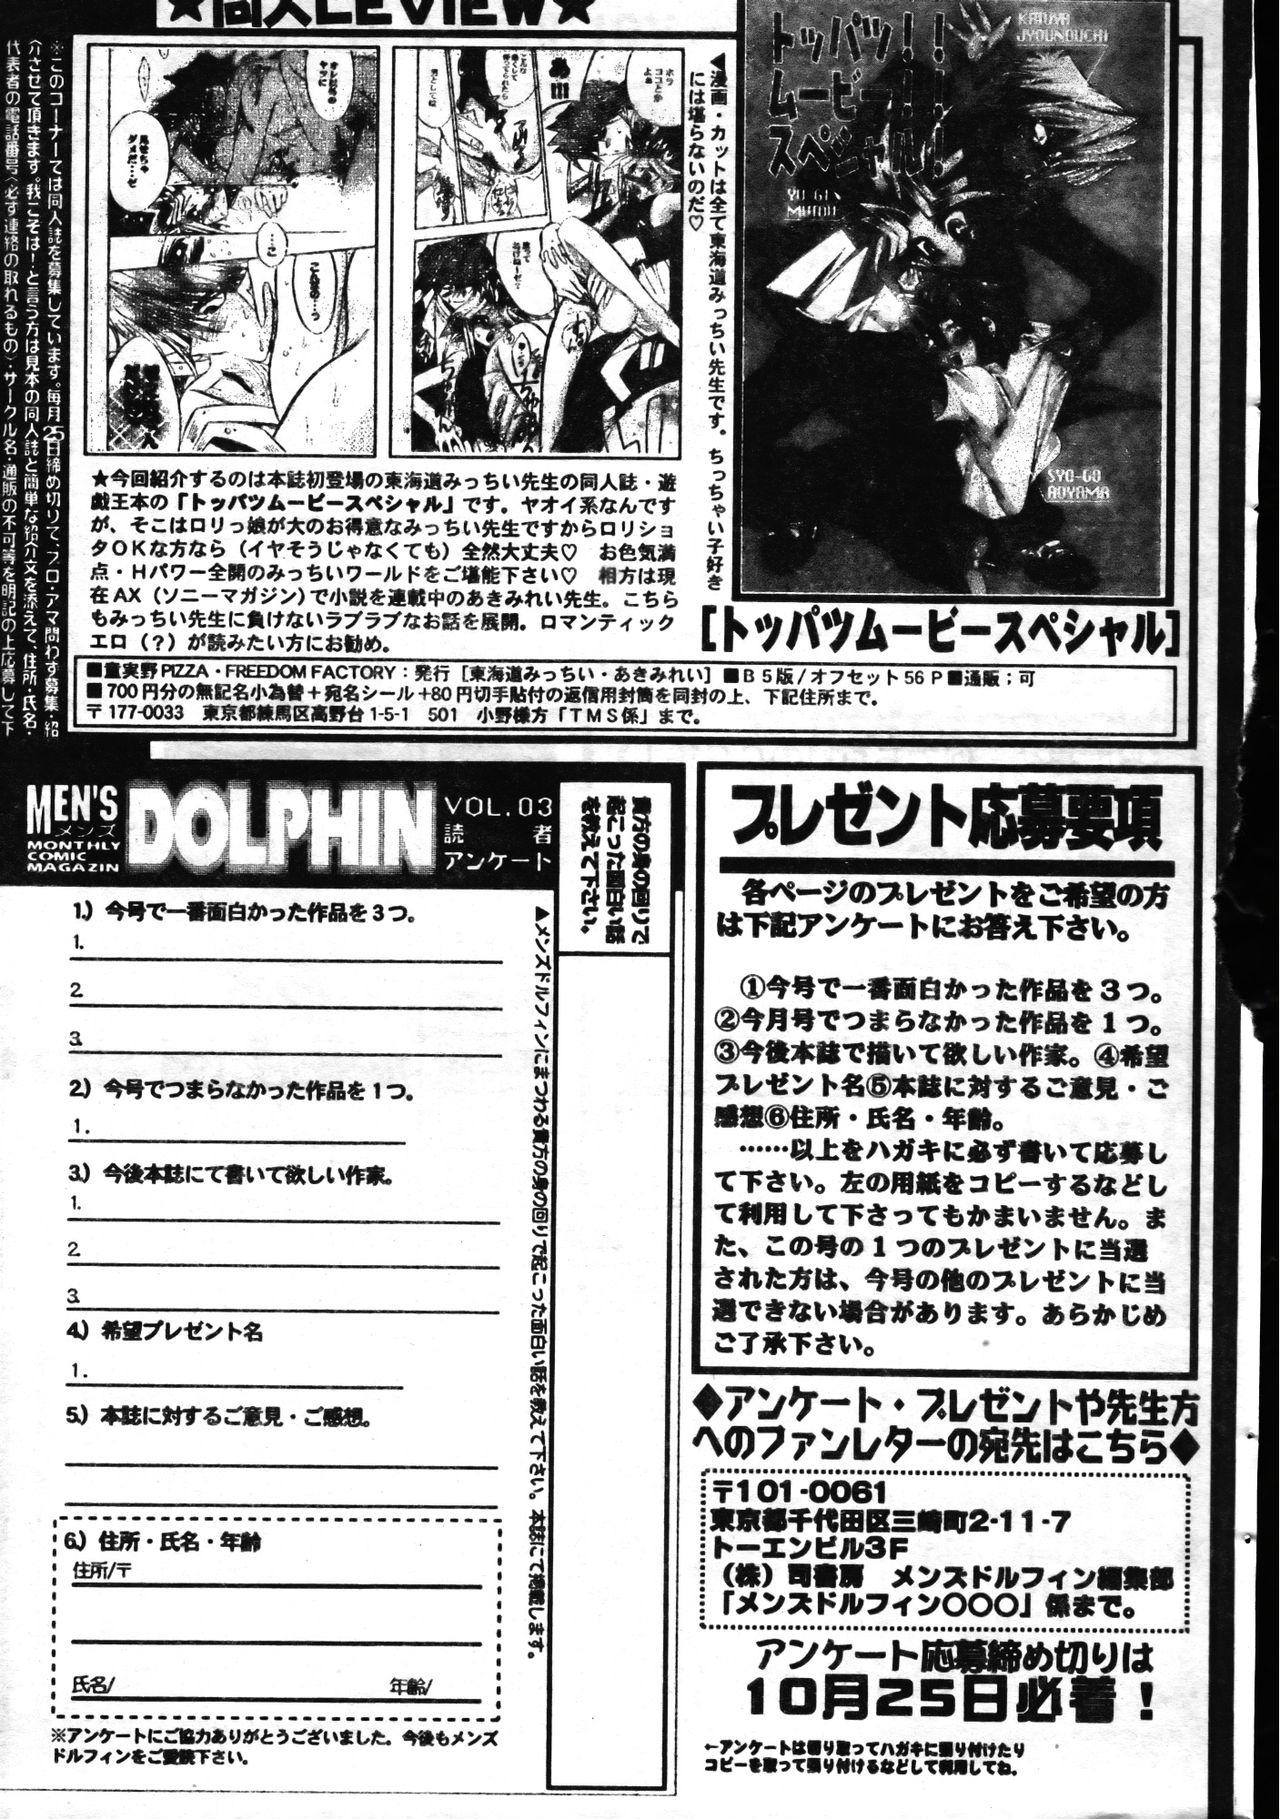 Men's Dolphin 1999-11-01 Vol.03 264